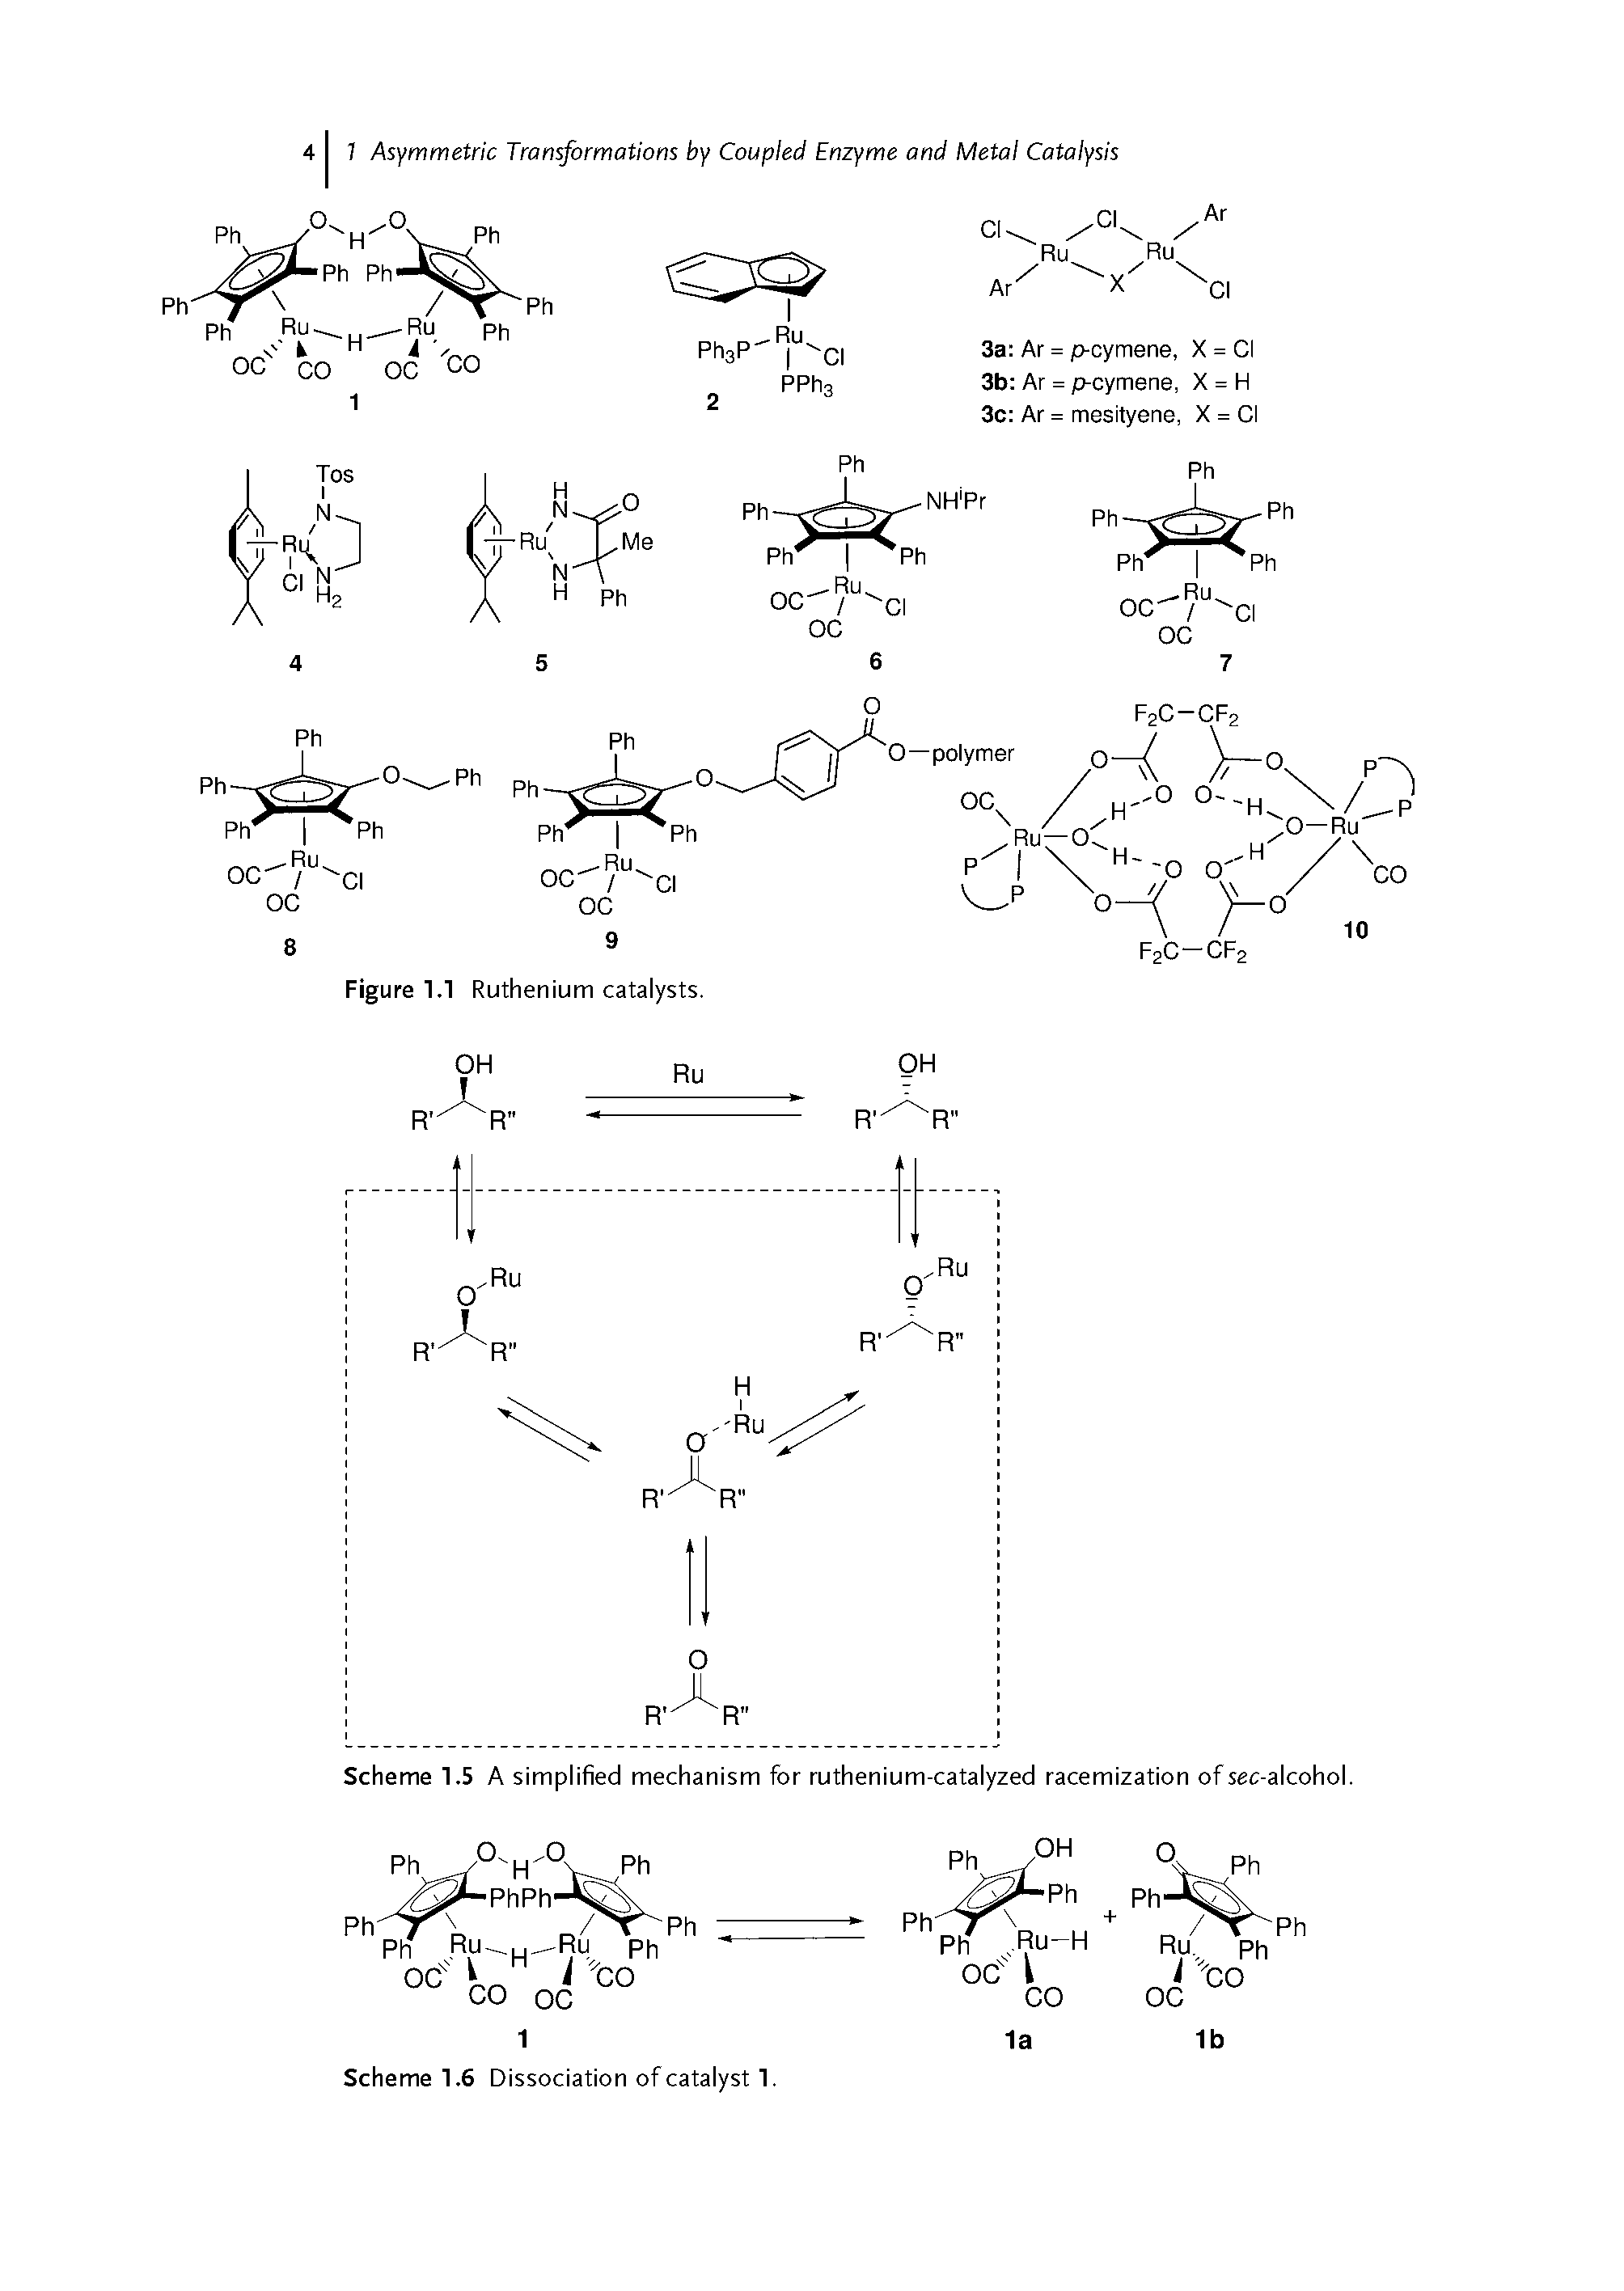 Scheme 1.5 A simplified mechanism for ruthenium-catalyzed racemization of sec-alcohol.